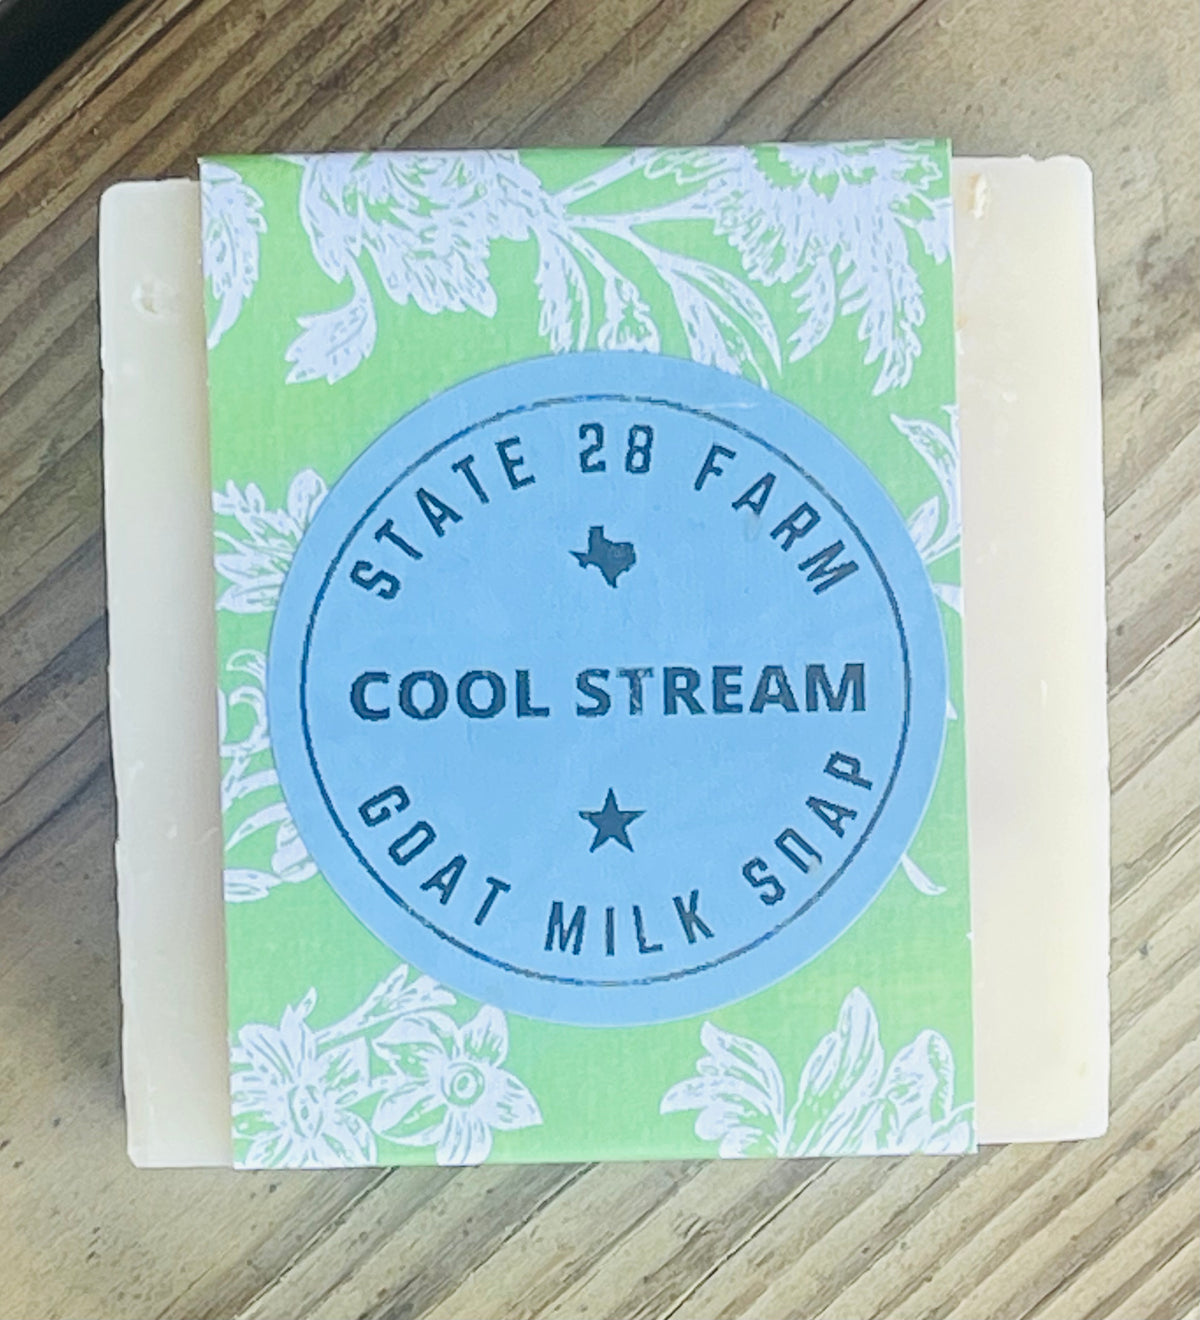 State 28 Farm - Goat Milk Soap